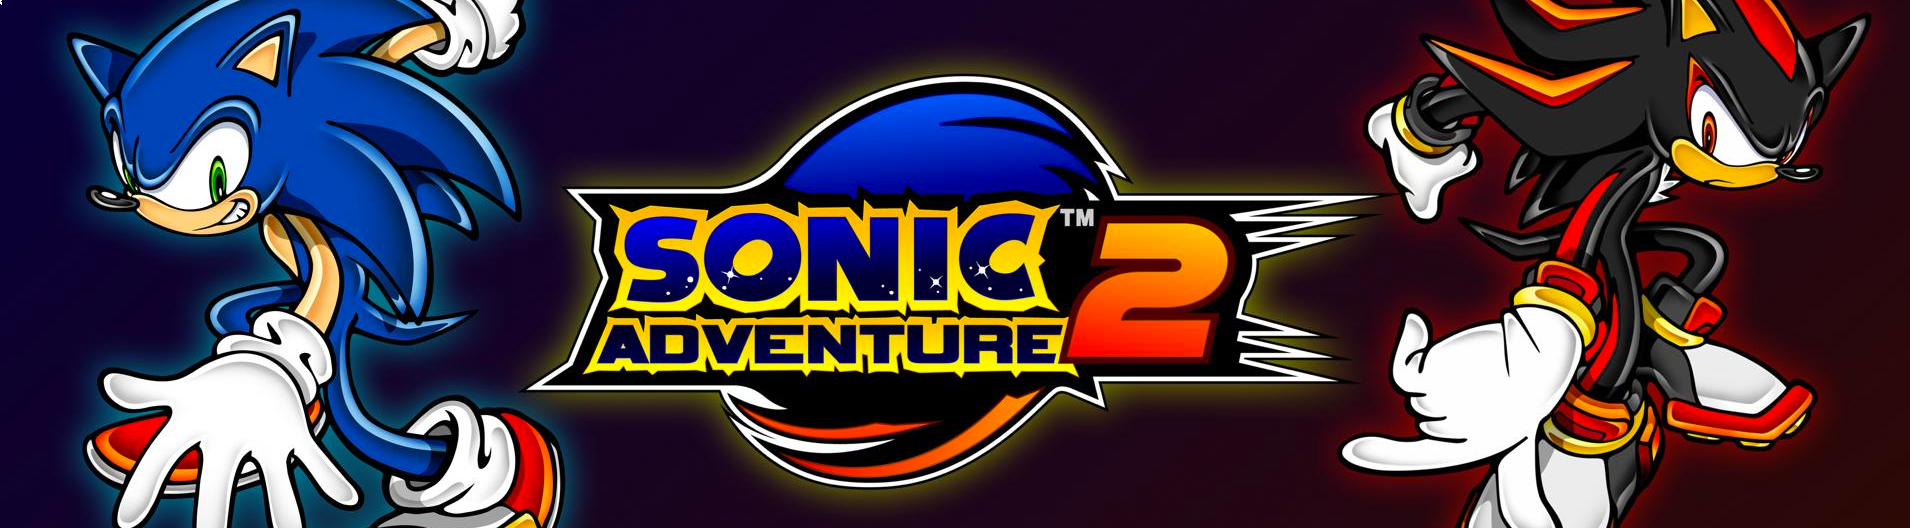 Banner Sonic Adventure 2 Battle